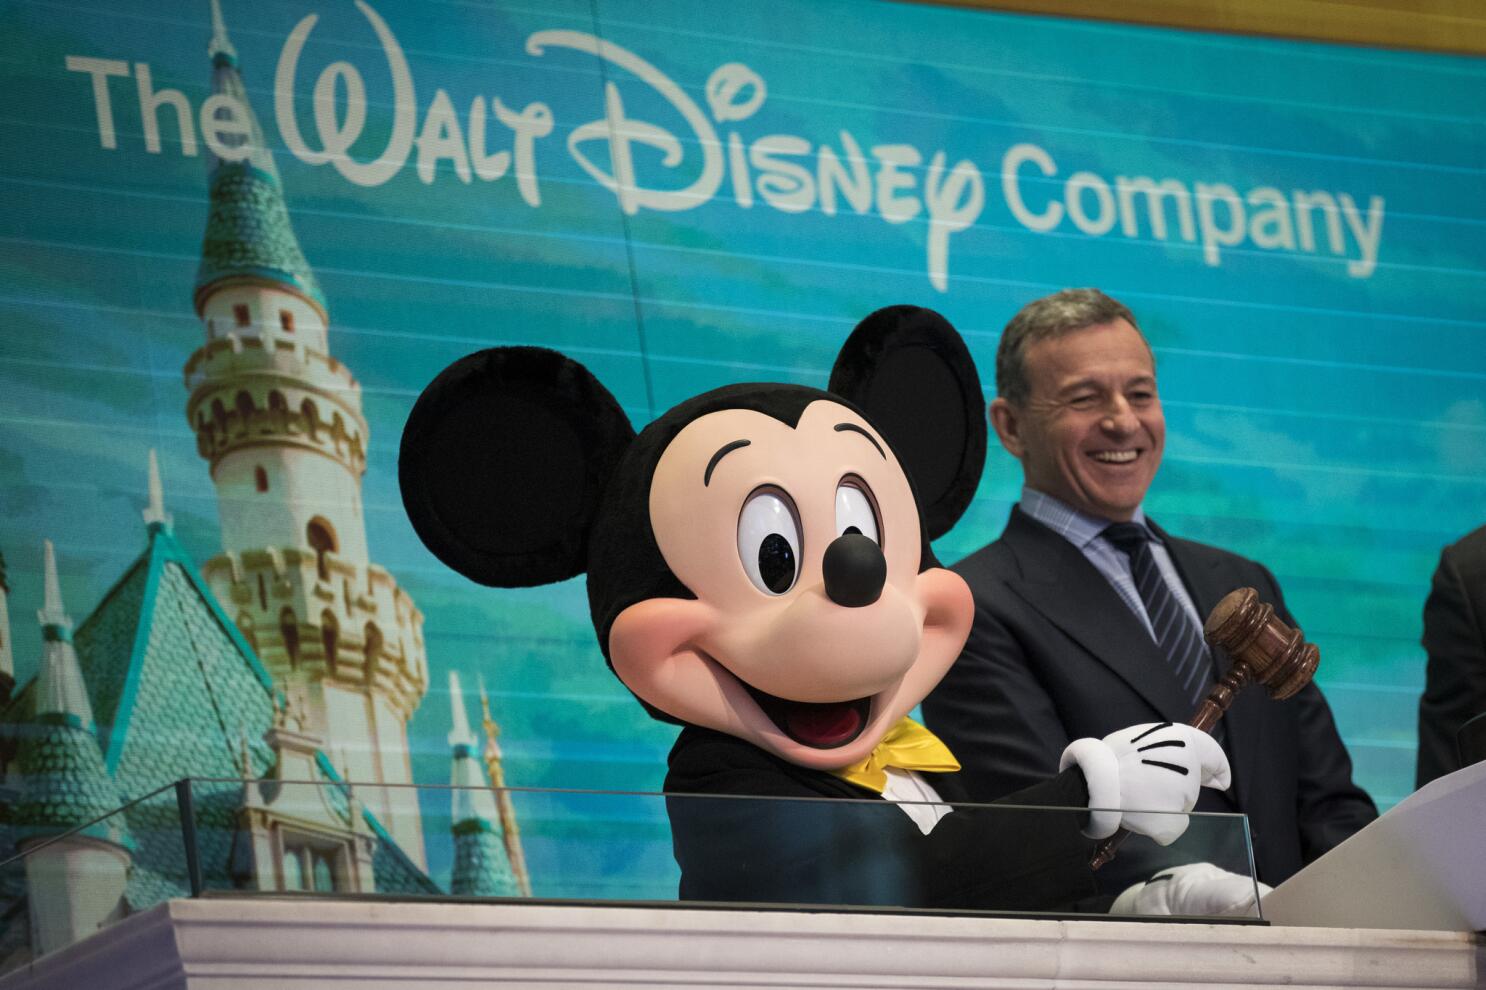 Disney Announces 4 Major Parks Improvements Following Bob Iger's Return